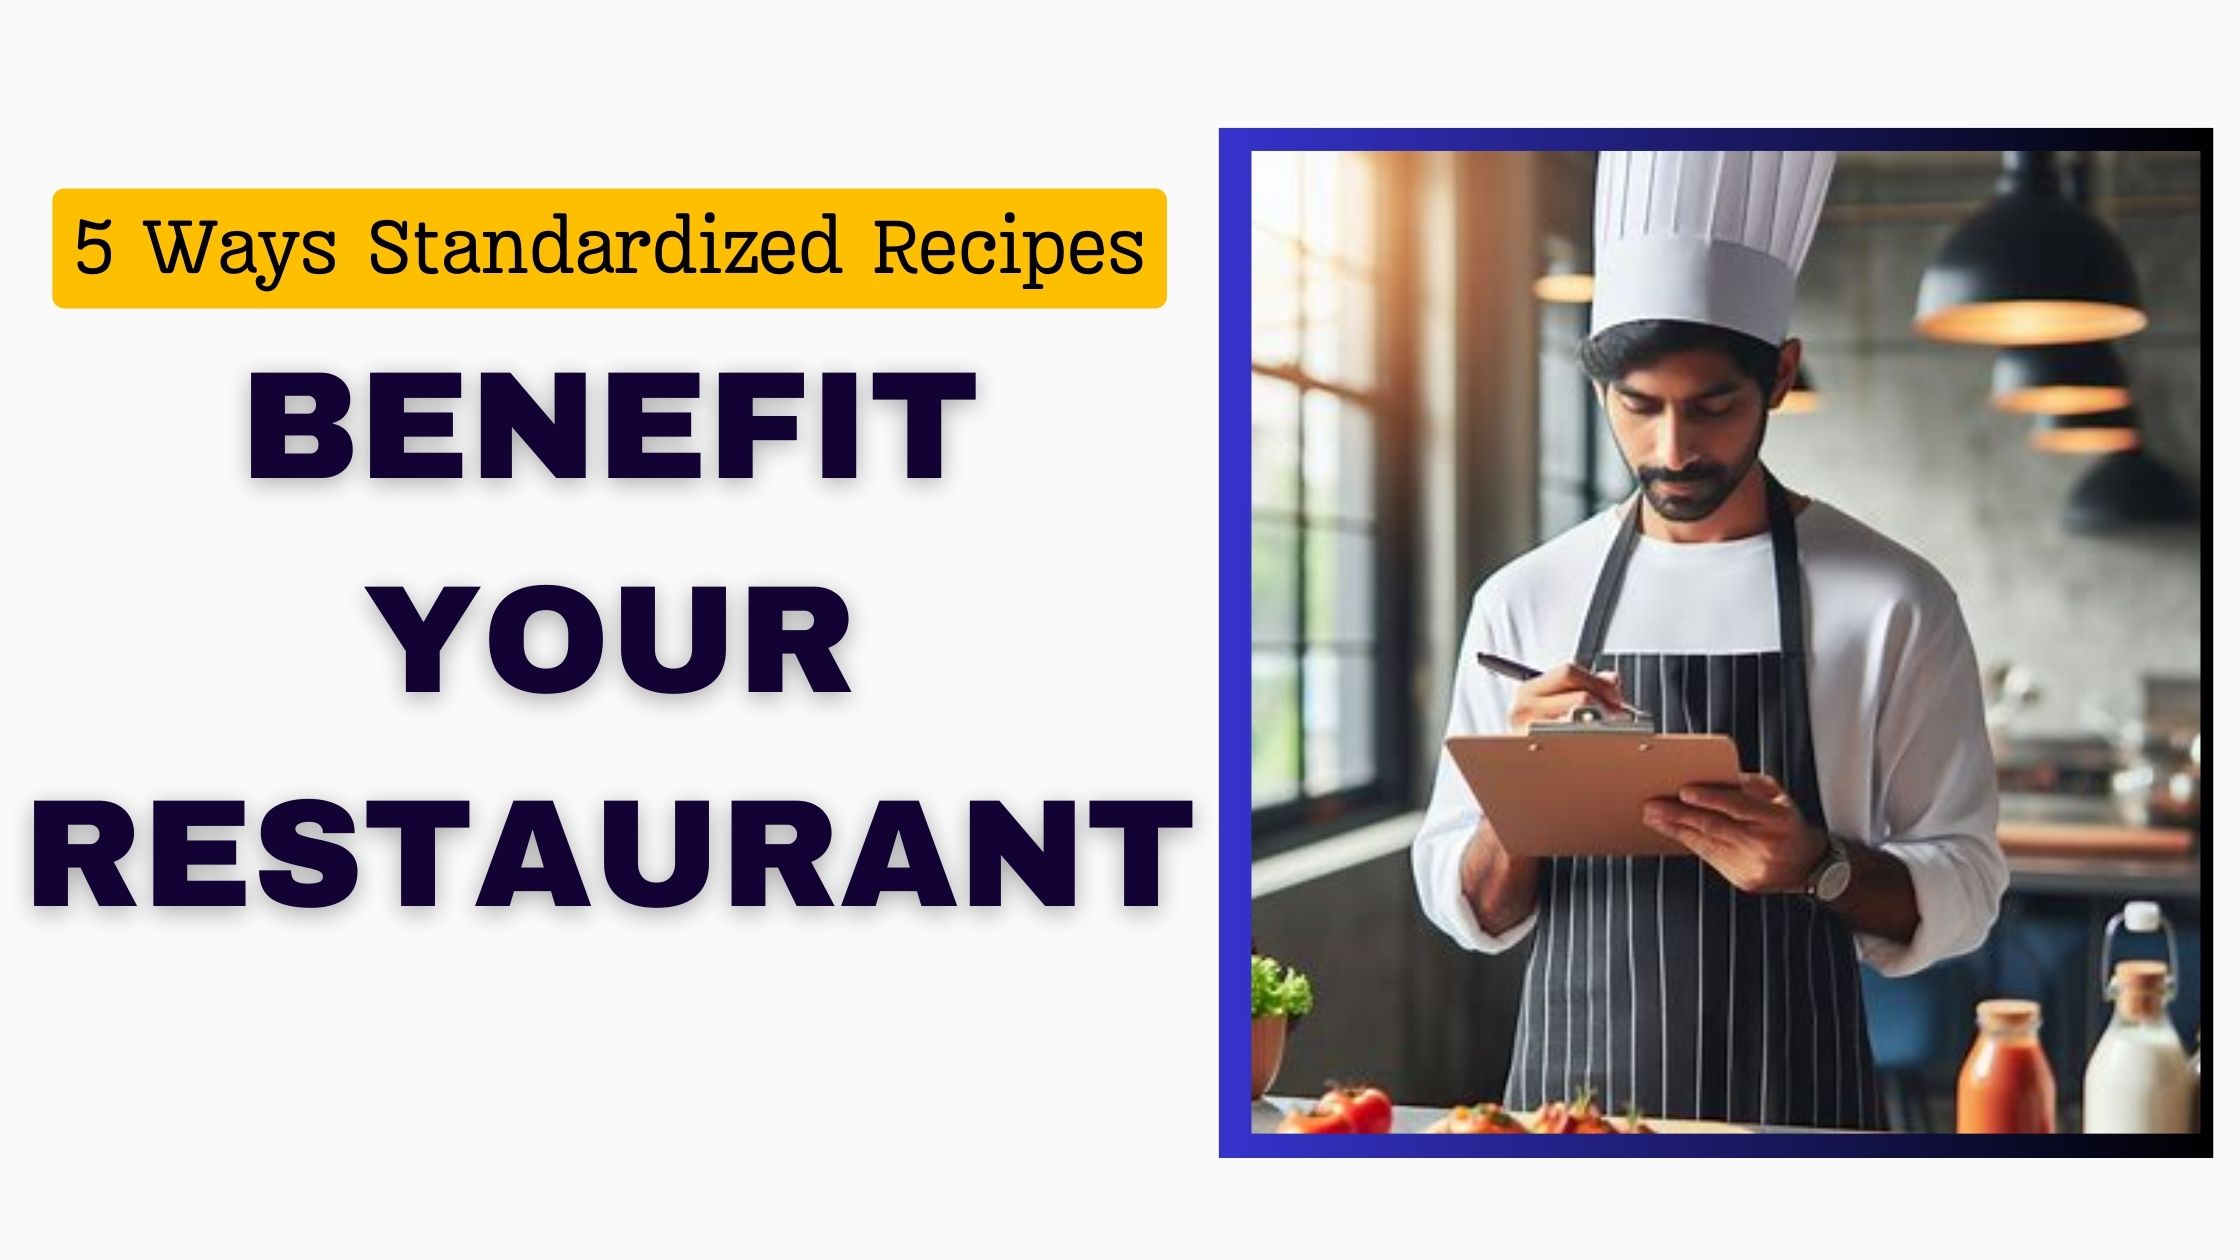 5 Ways Standardized Recipes Benefit Your Restaurant